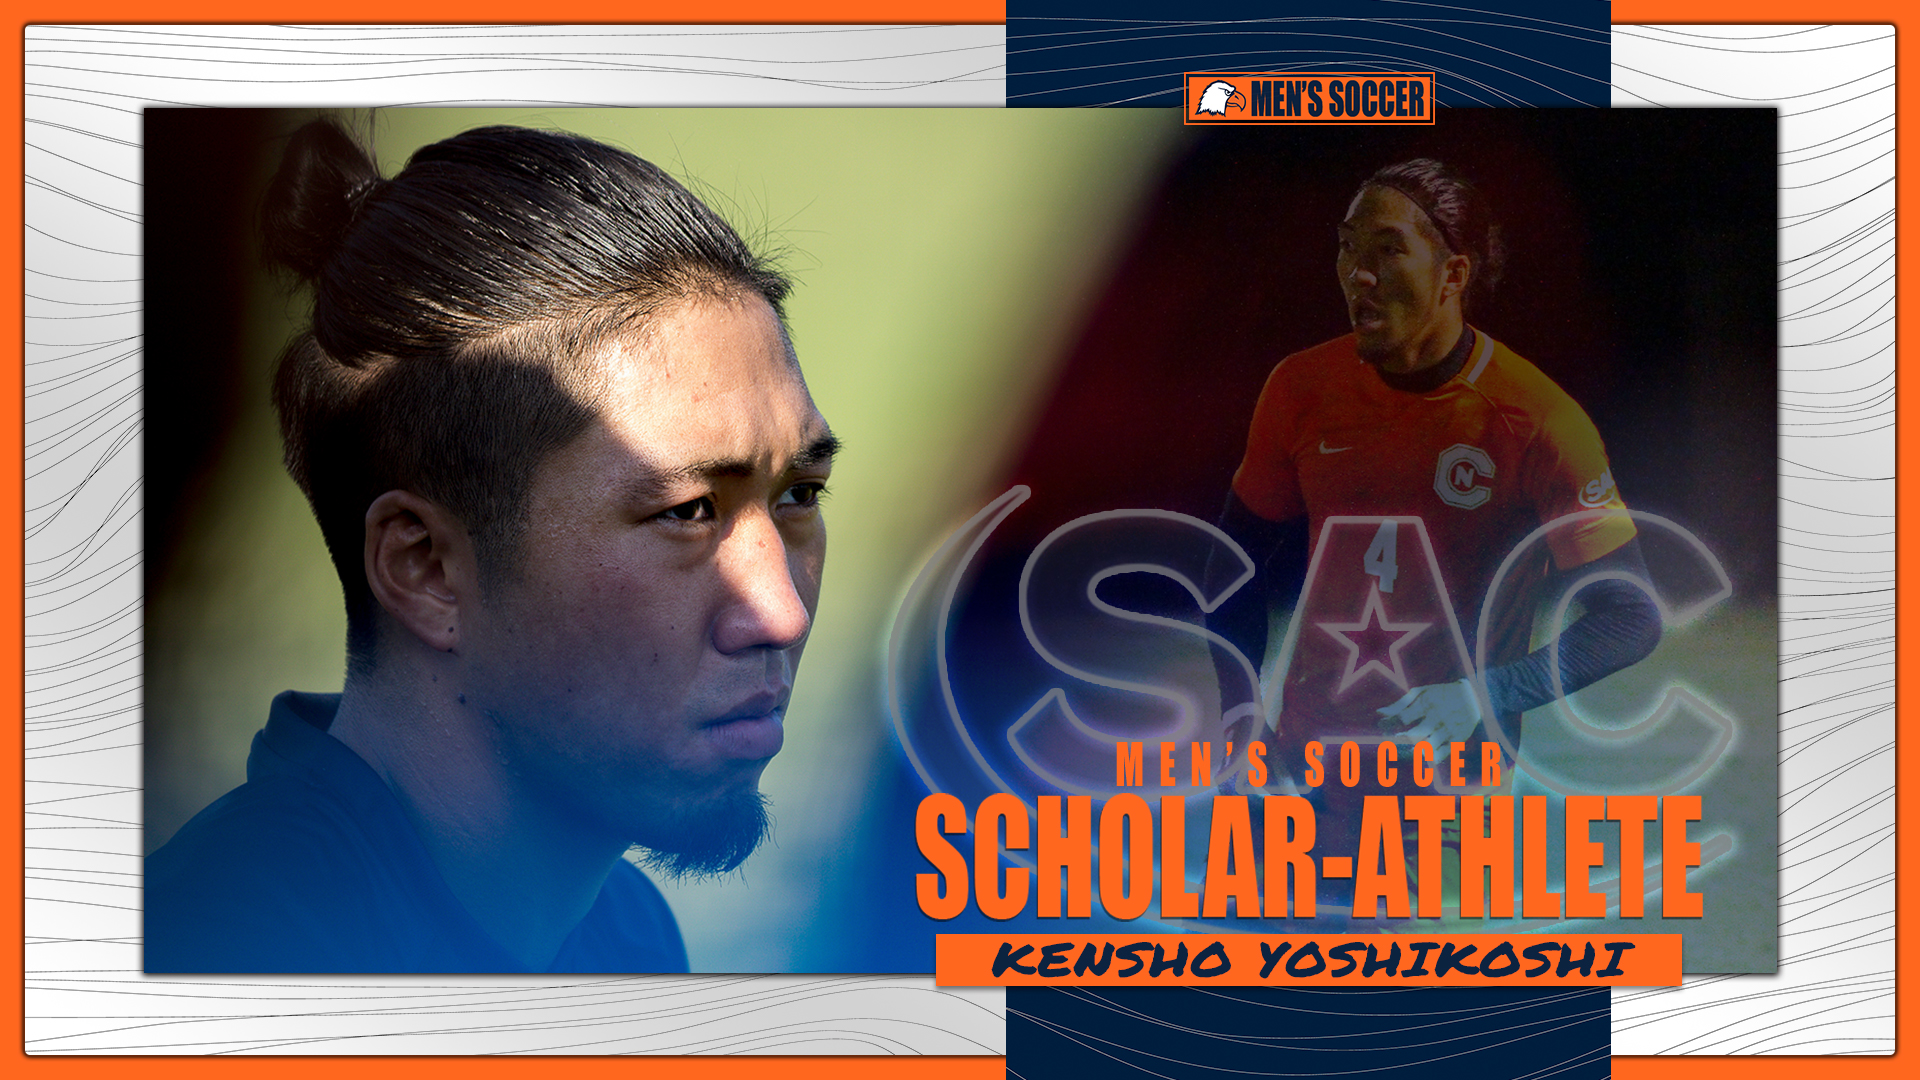 SAC awards Yoshikoshi as Men's Soccer Scholar-Athlete of the Year